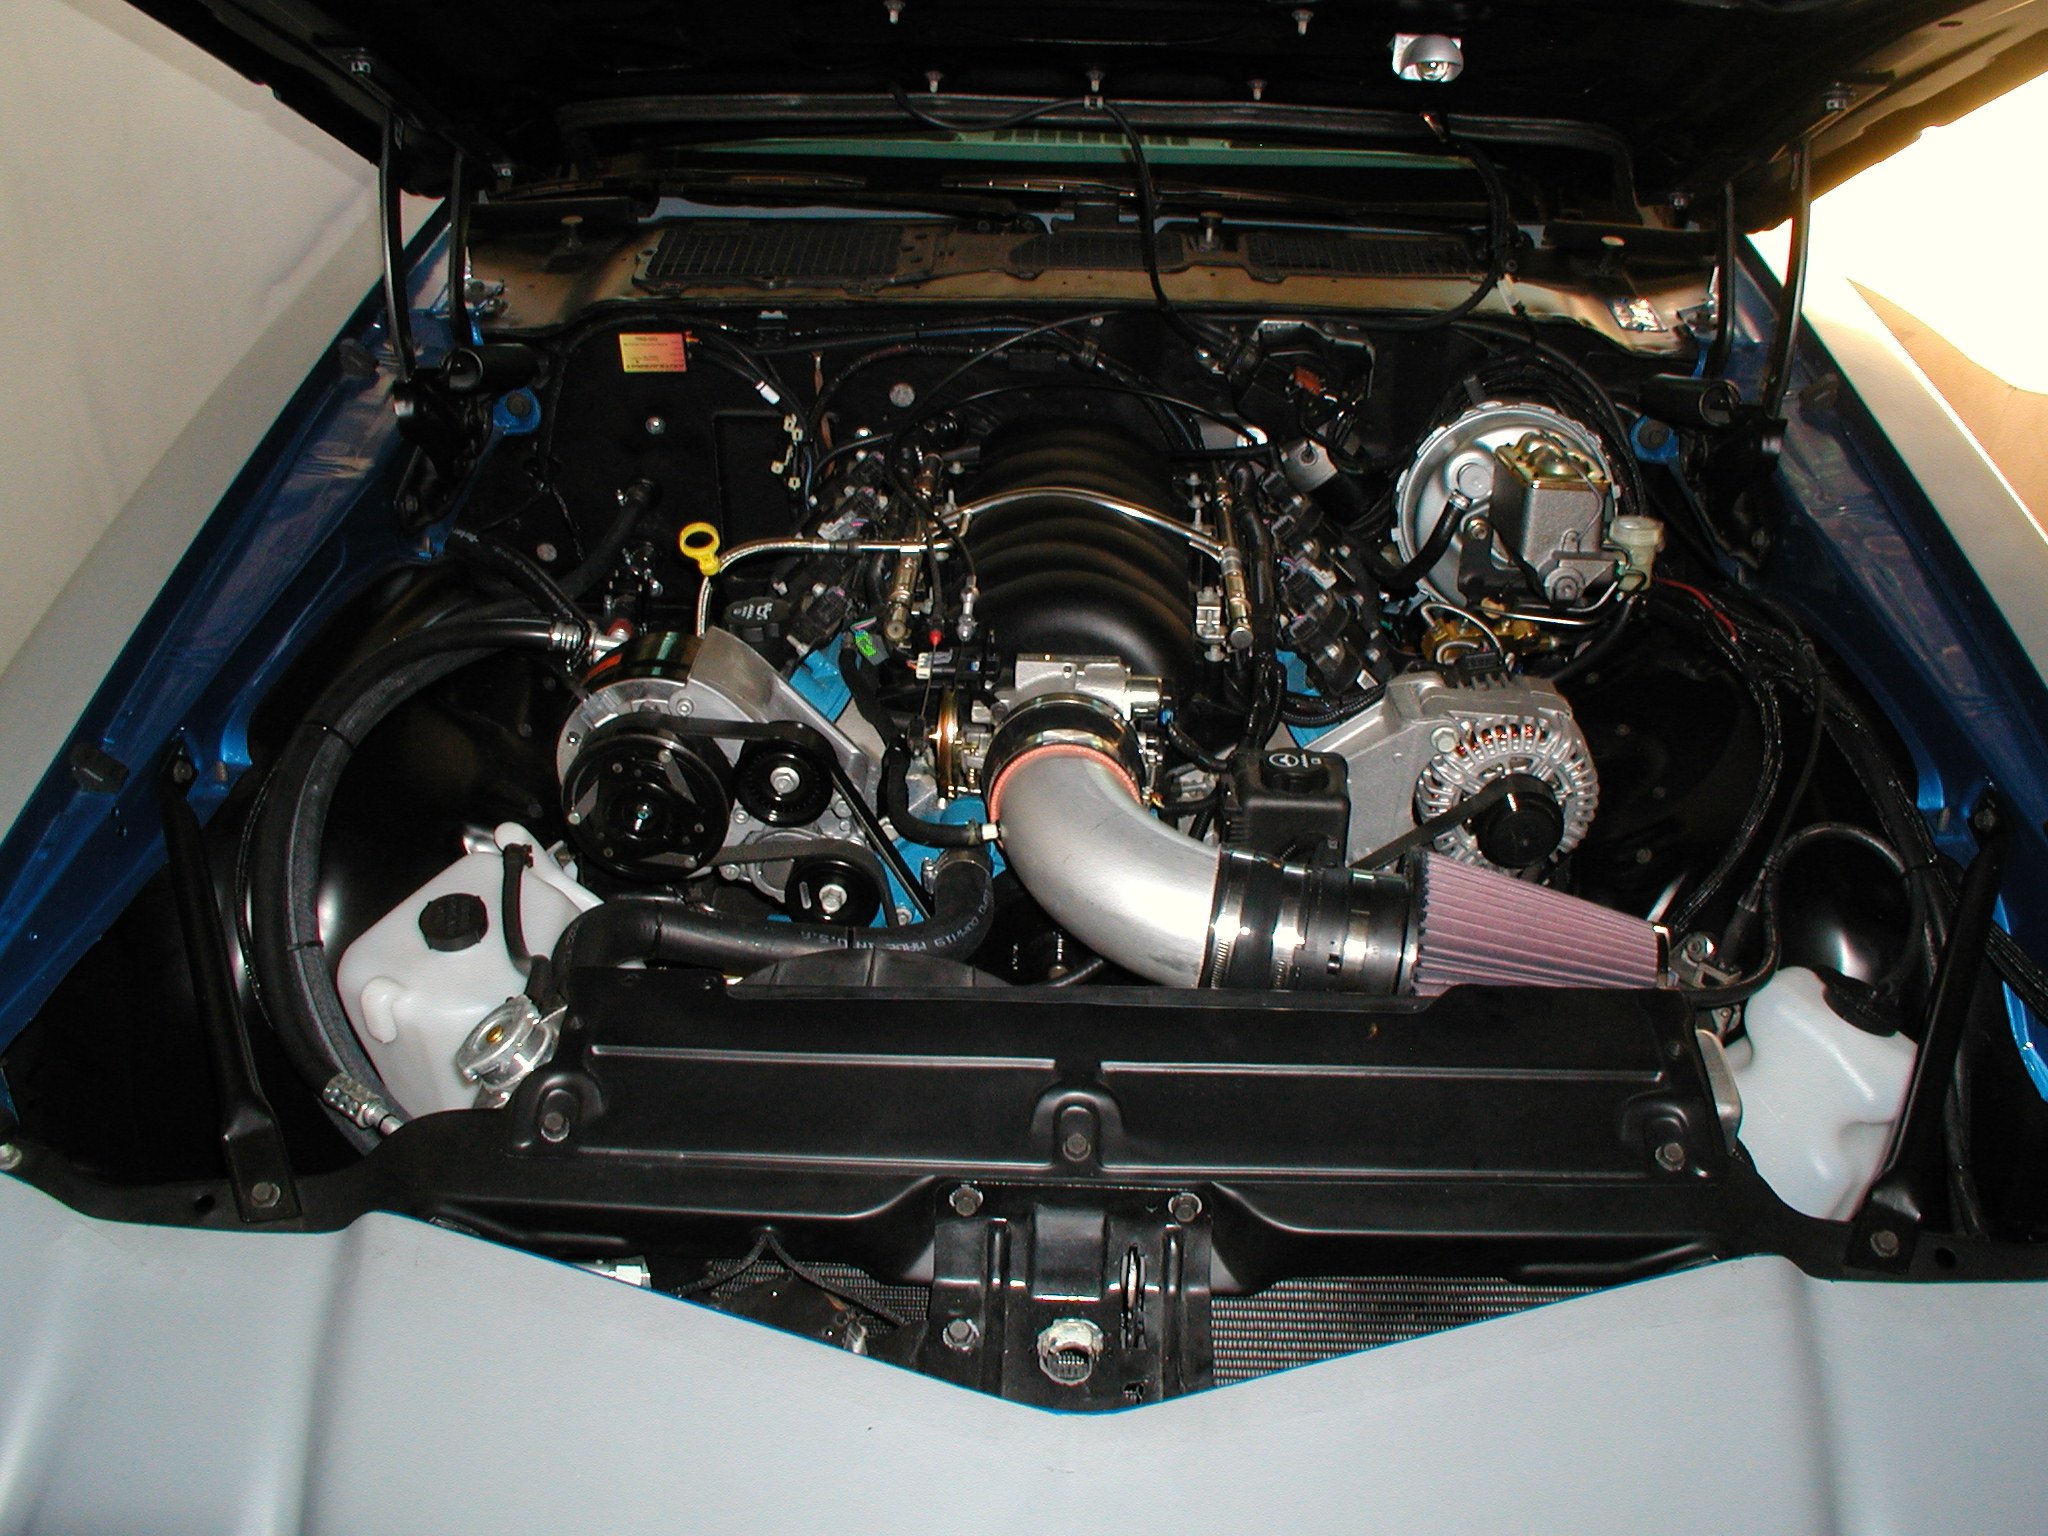 Camaro engine bay 3-14-2014 7.JPG